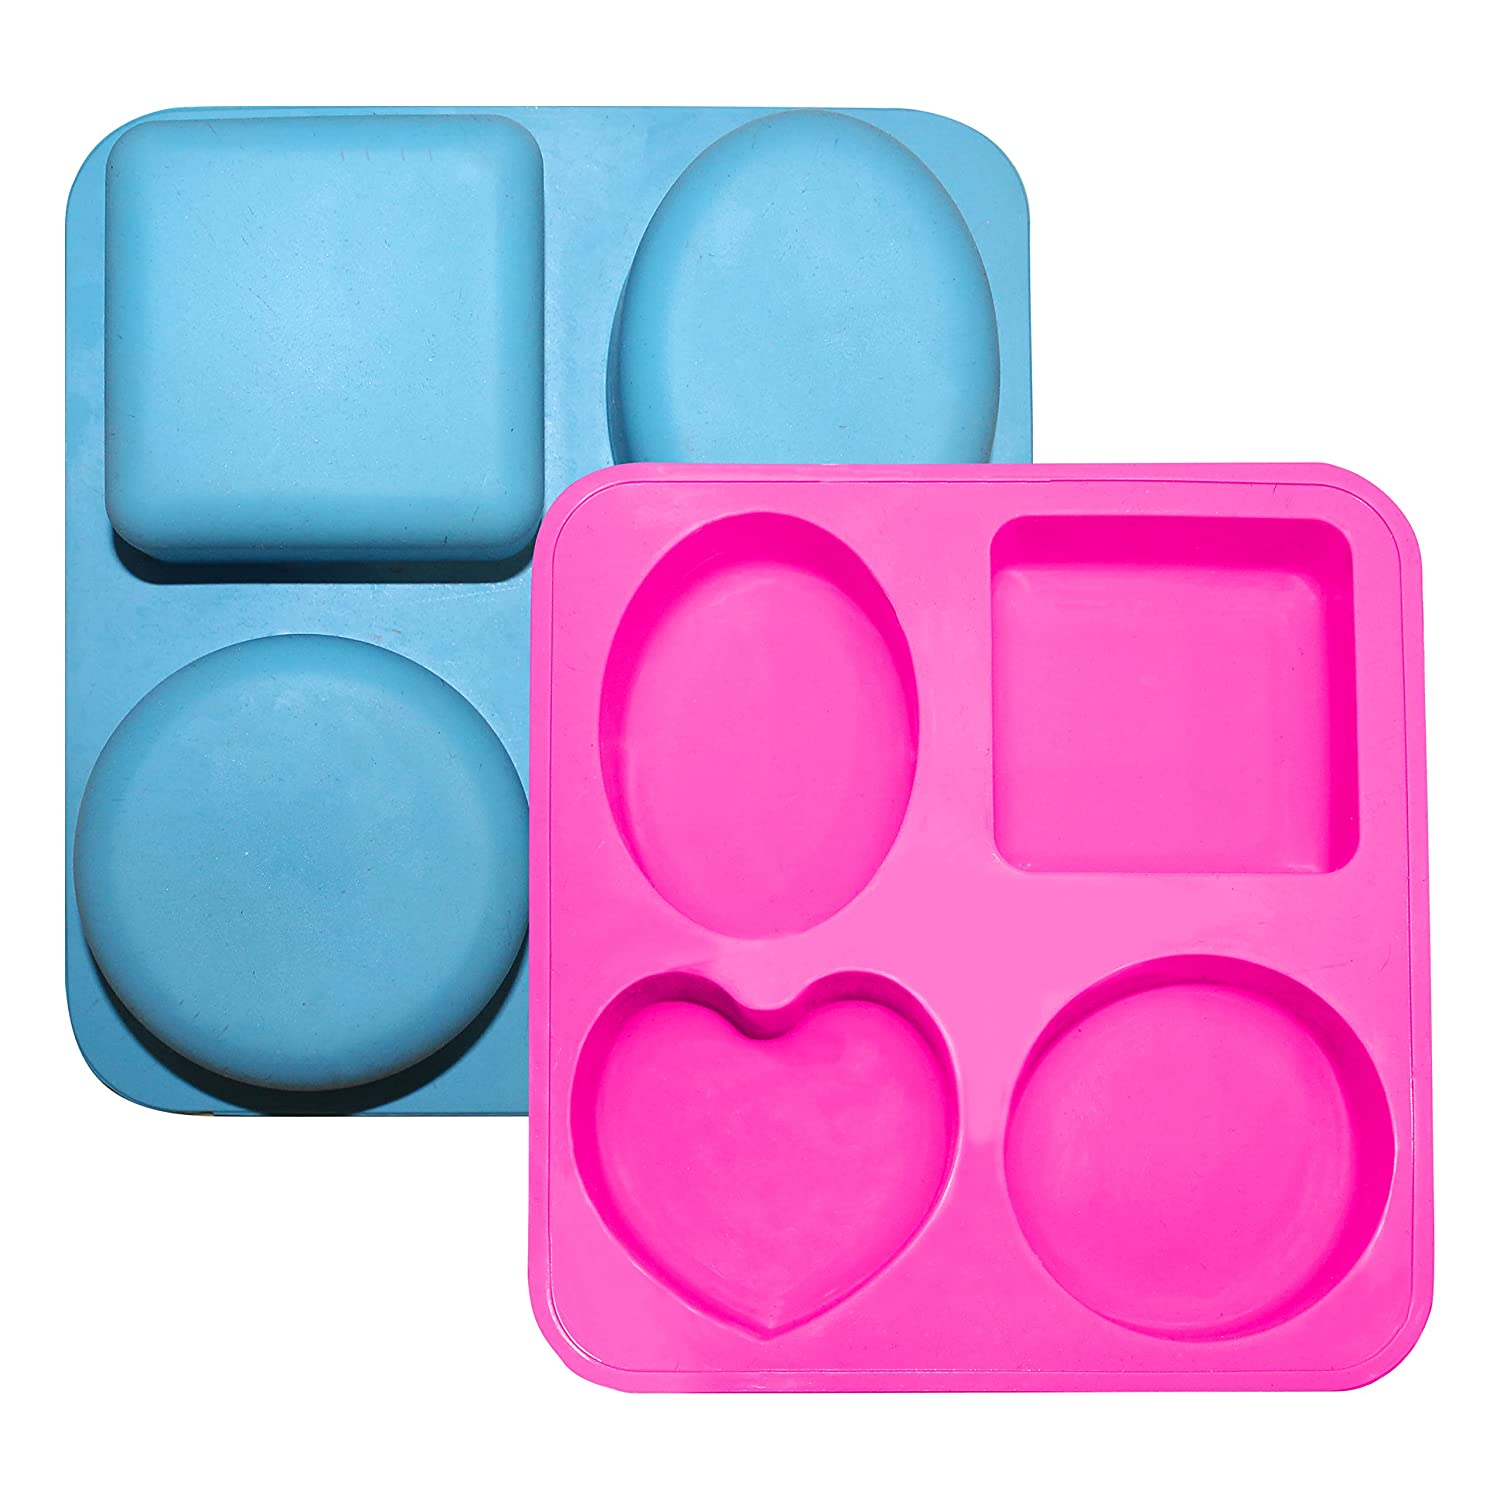 Shoprythm Myoc MYOC 4 Cavity Silicone Soap Mould for DIY Handmade Bathing Bar & Soap - Oval, Square, Heart, Circle - Pack of 1 (Multicolour)